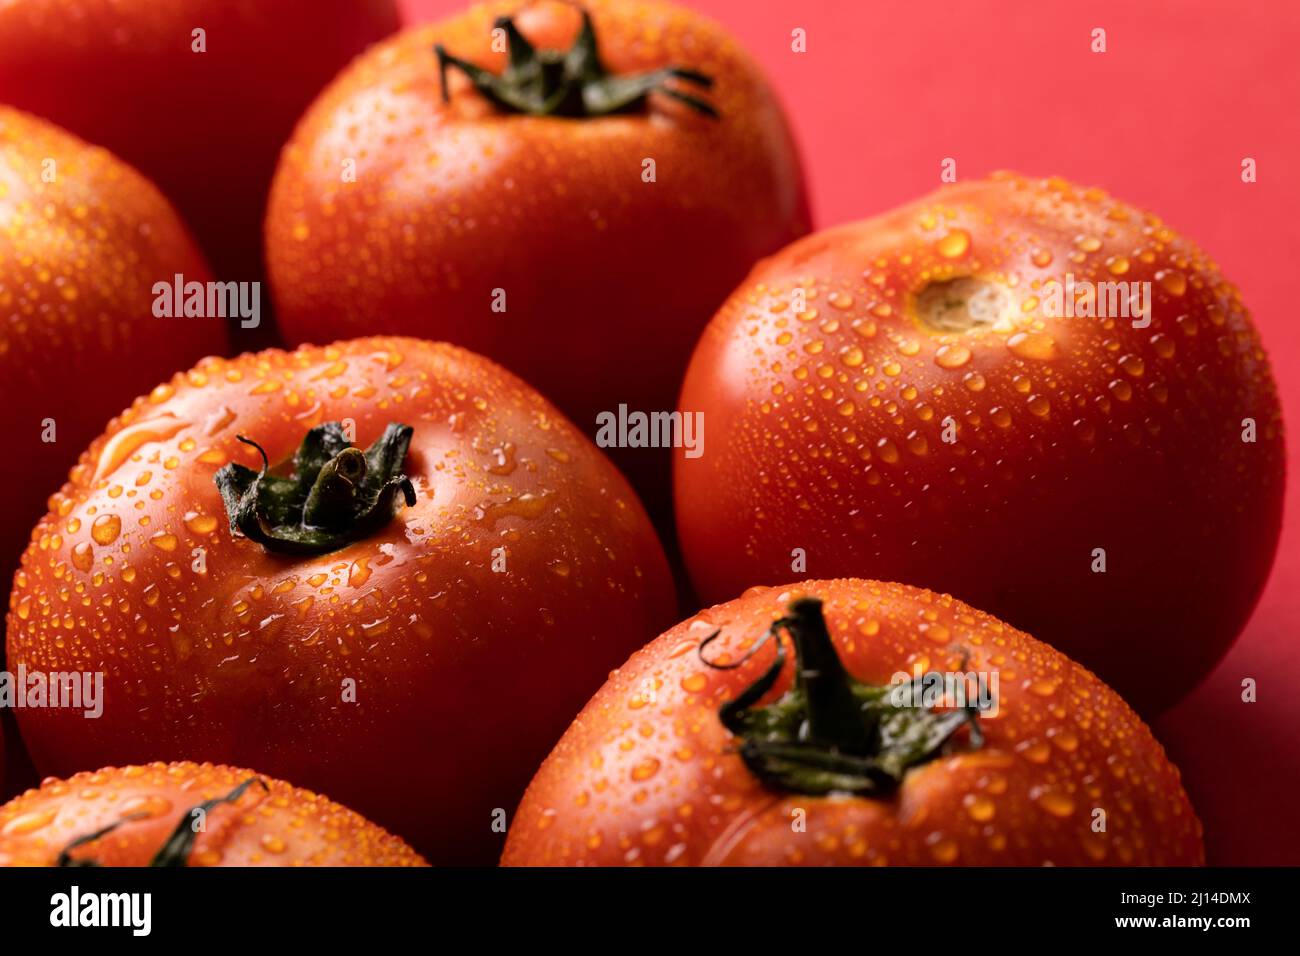 Primer plano de tomates rojos frescos con gotas de agua sobre fondo coloreado Foto de stock